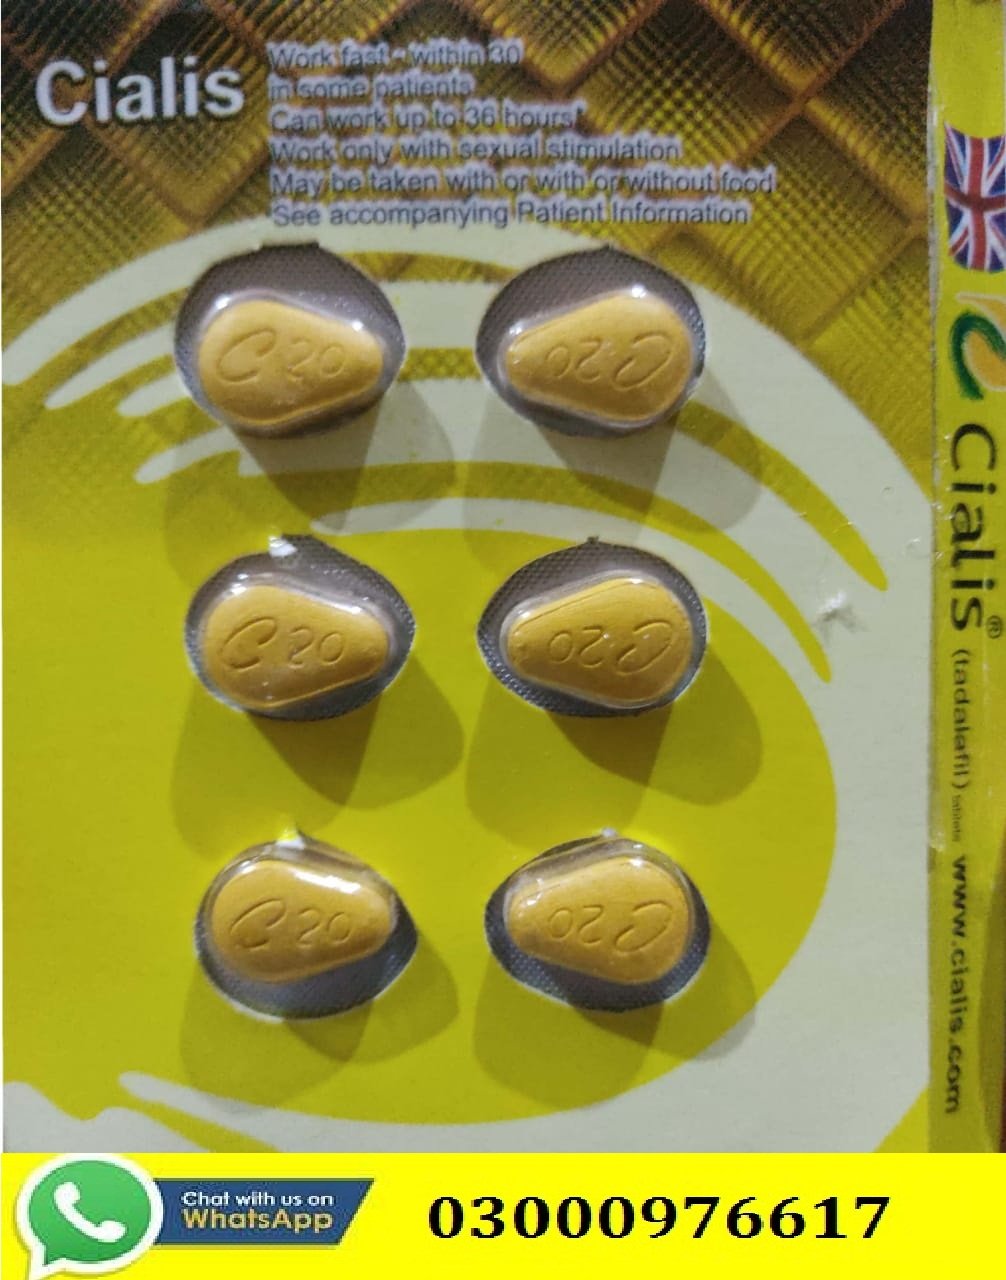 Cialis 6 Tablets in Bahawalpur -03000976617-etsyherbal.com